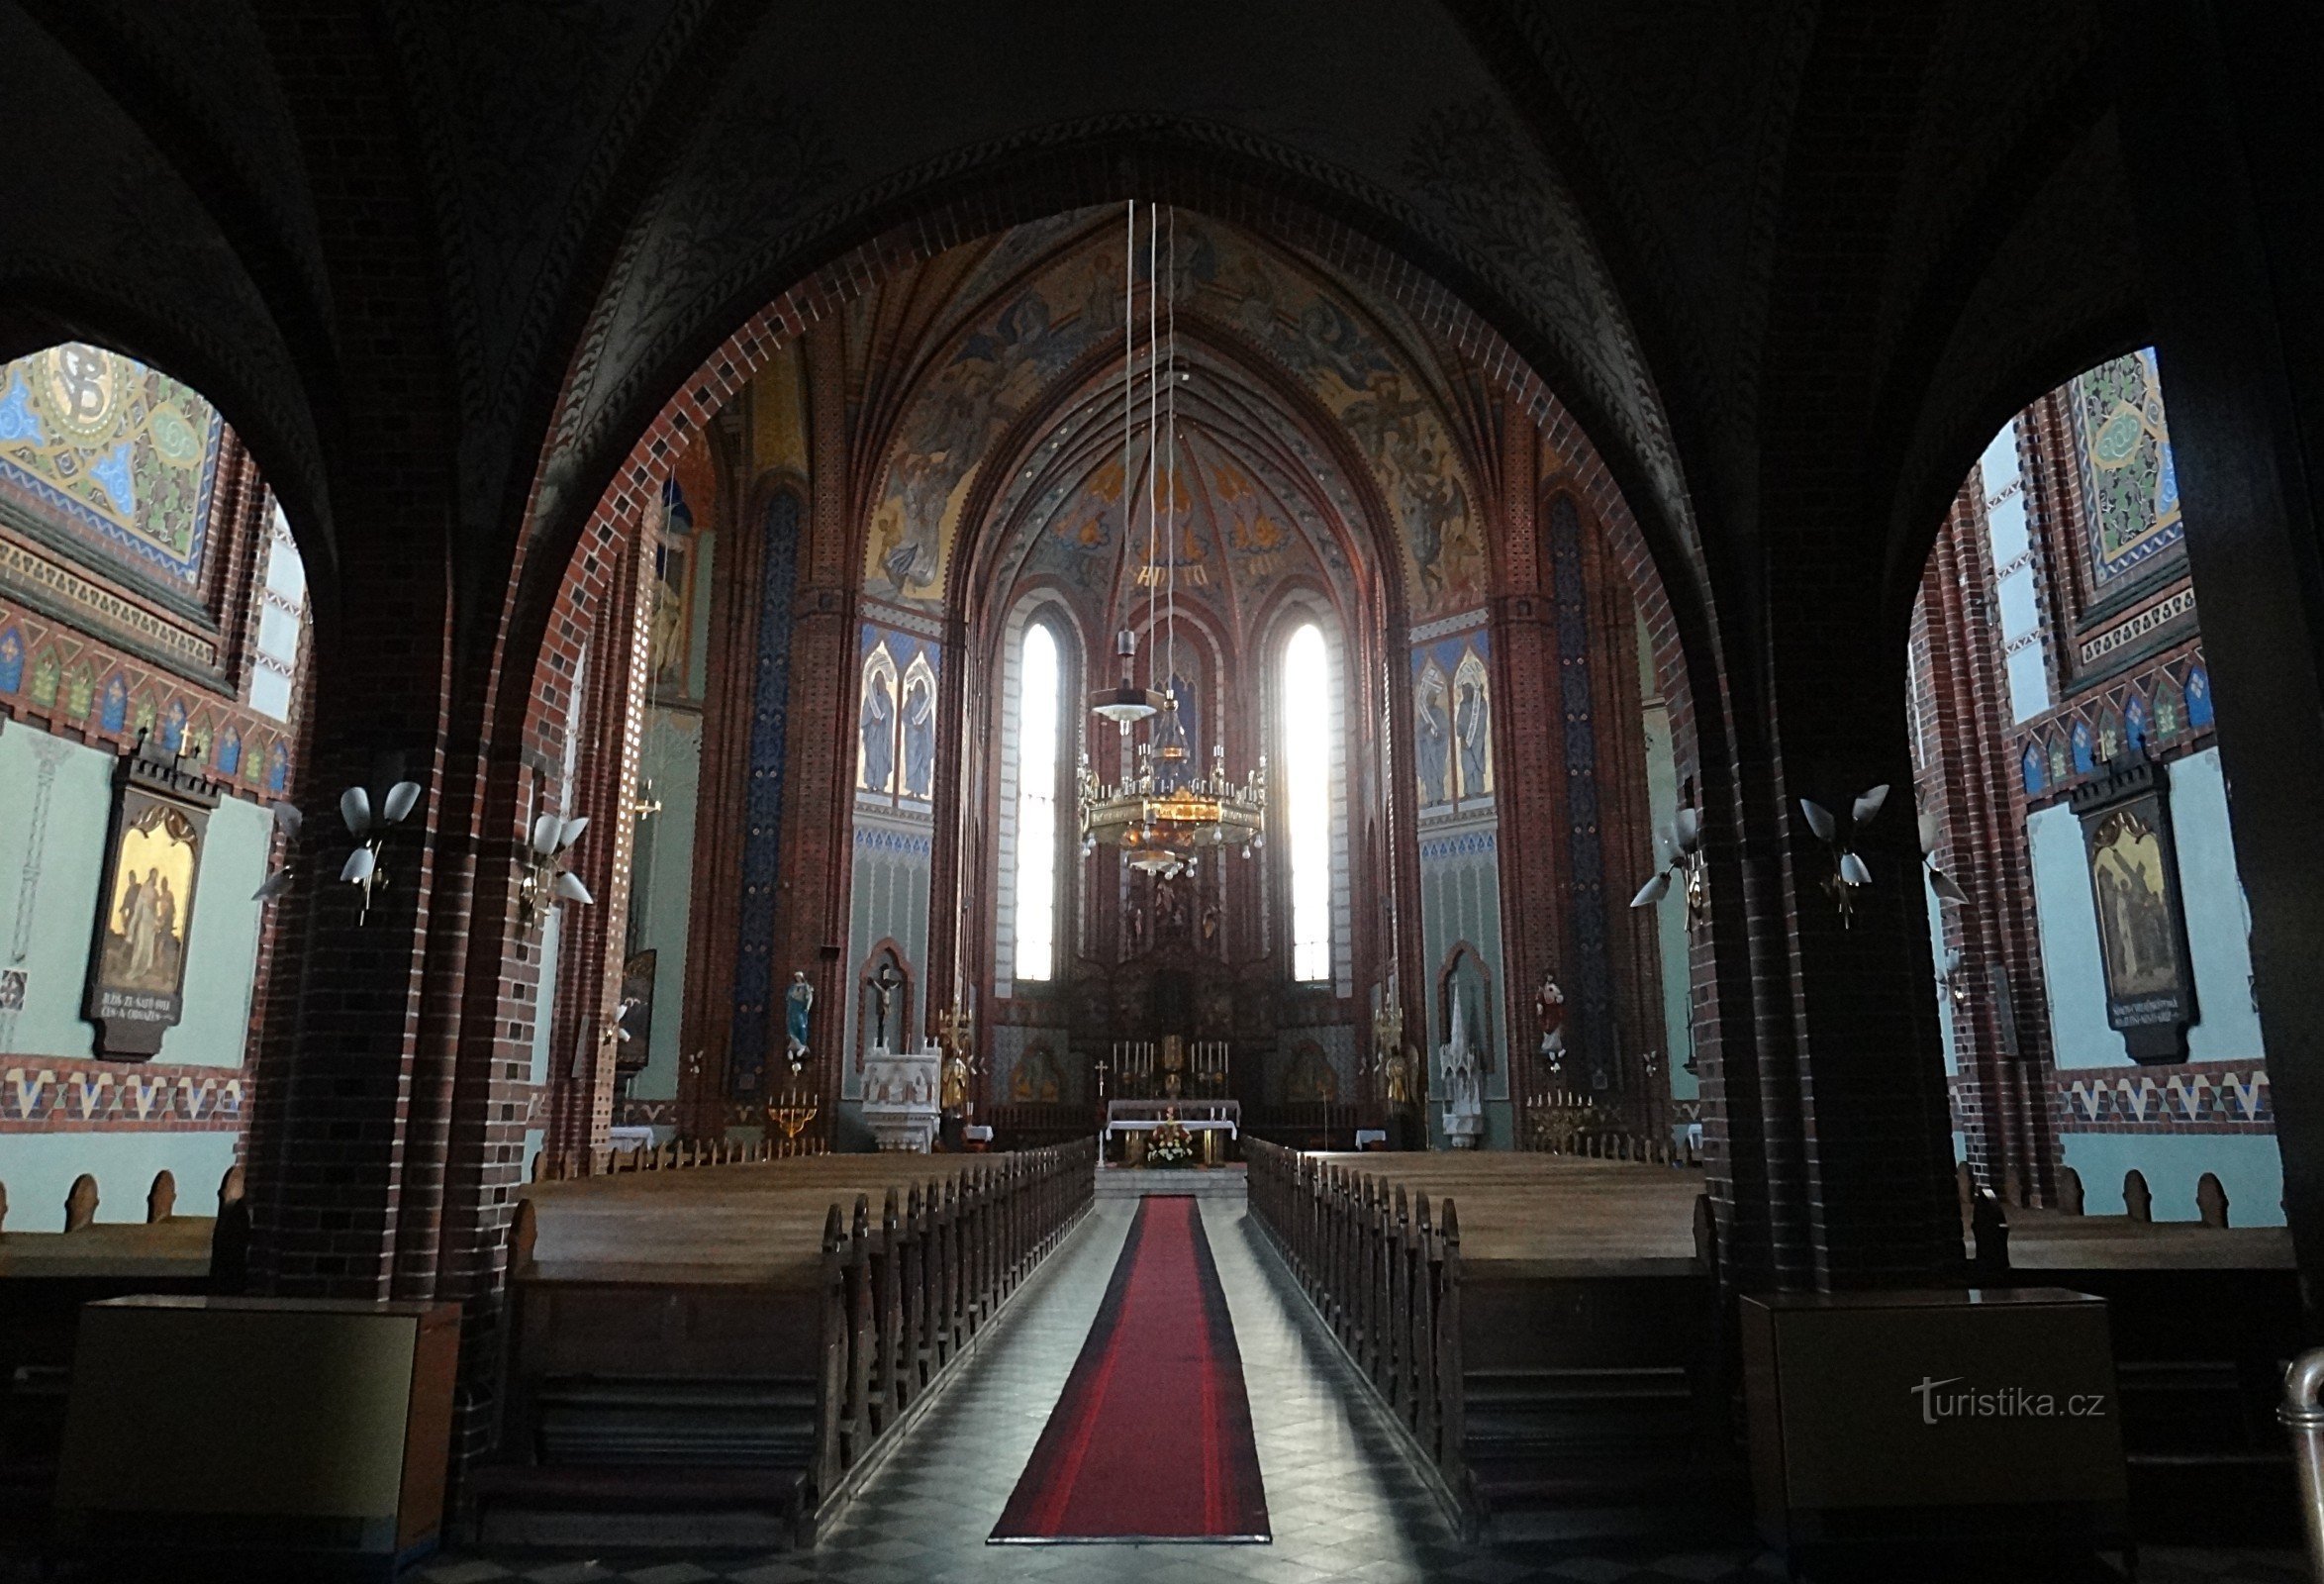 Ludgeřovice interijer crkve sv. Nikole